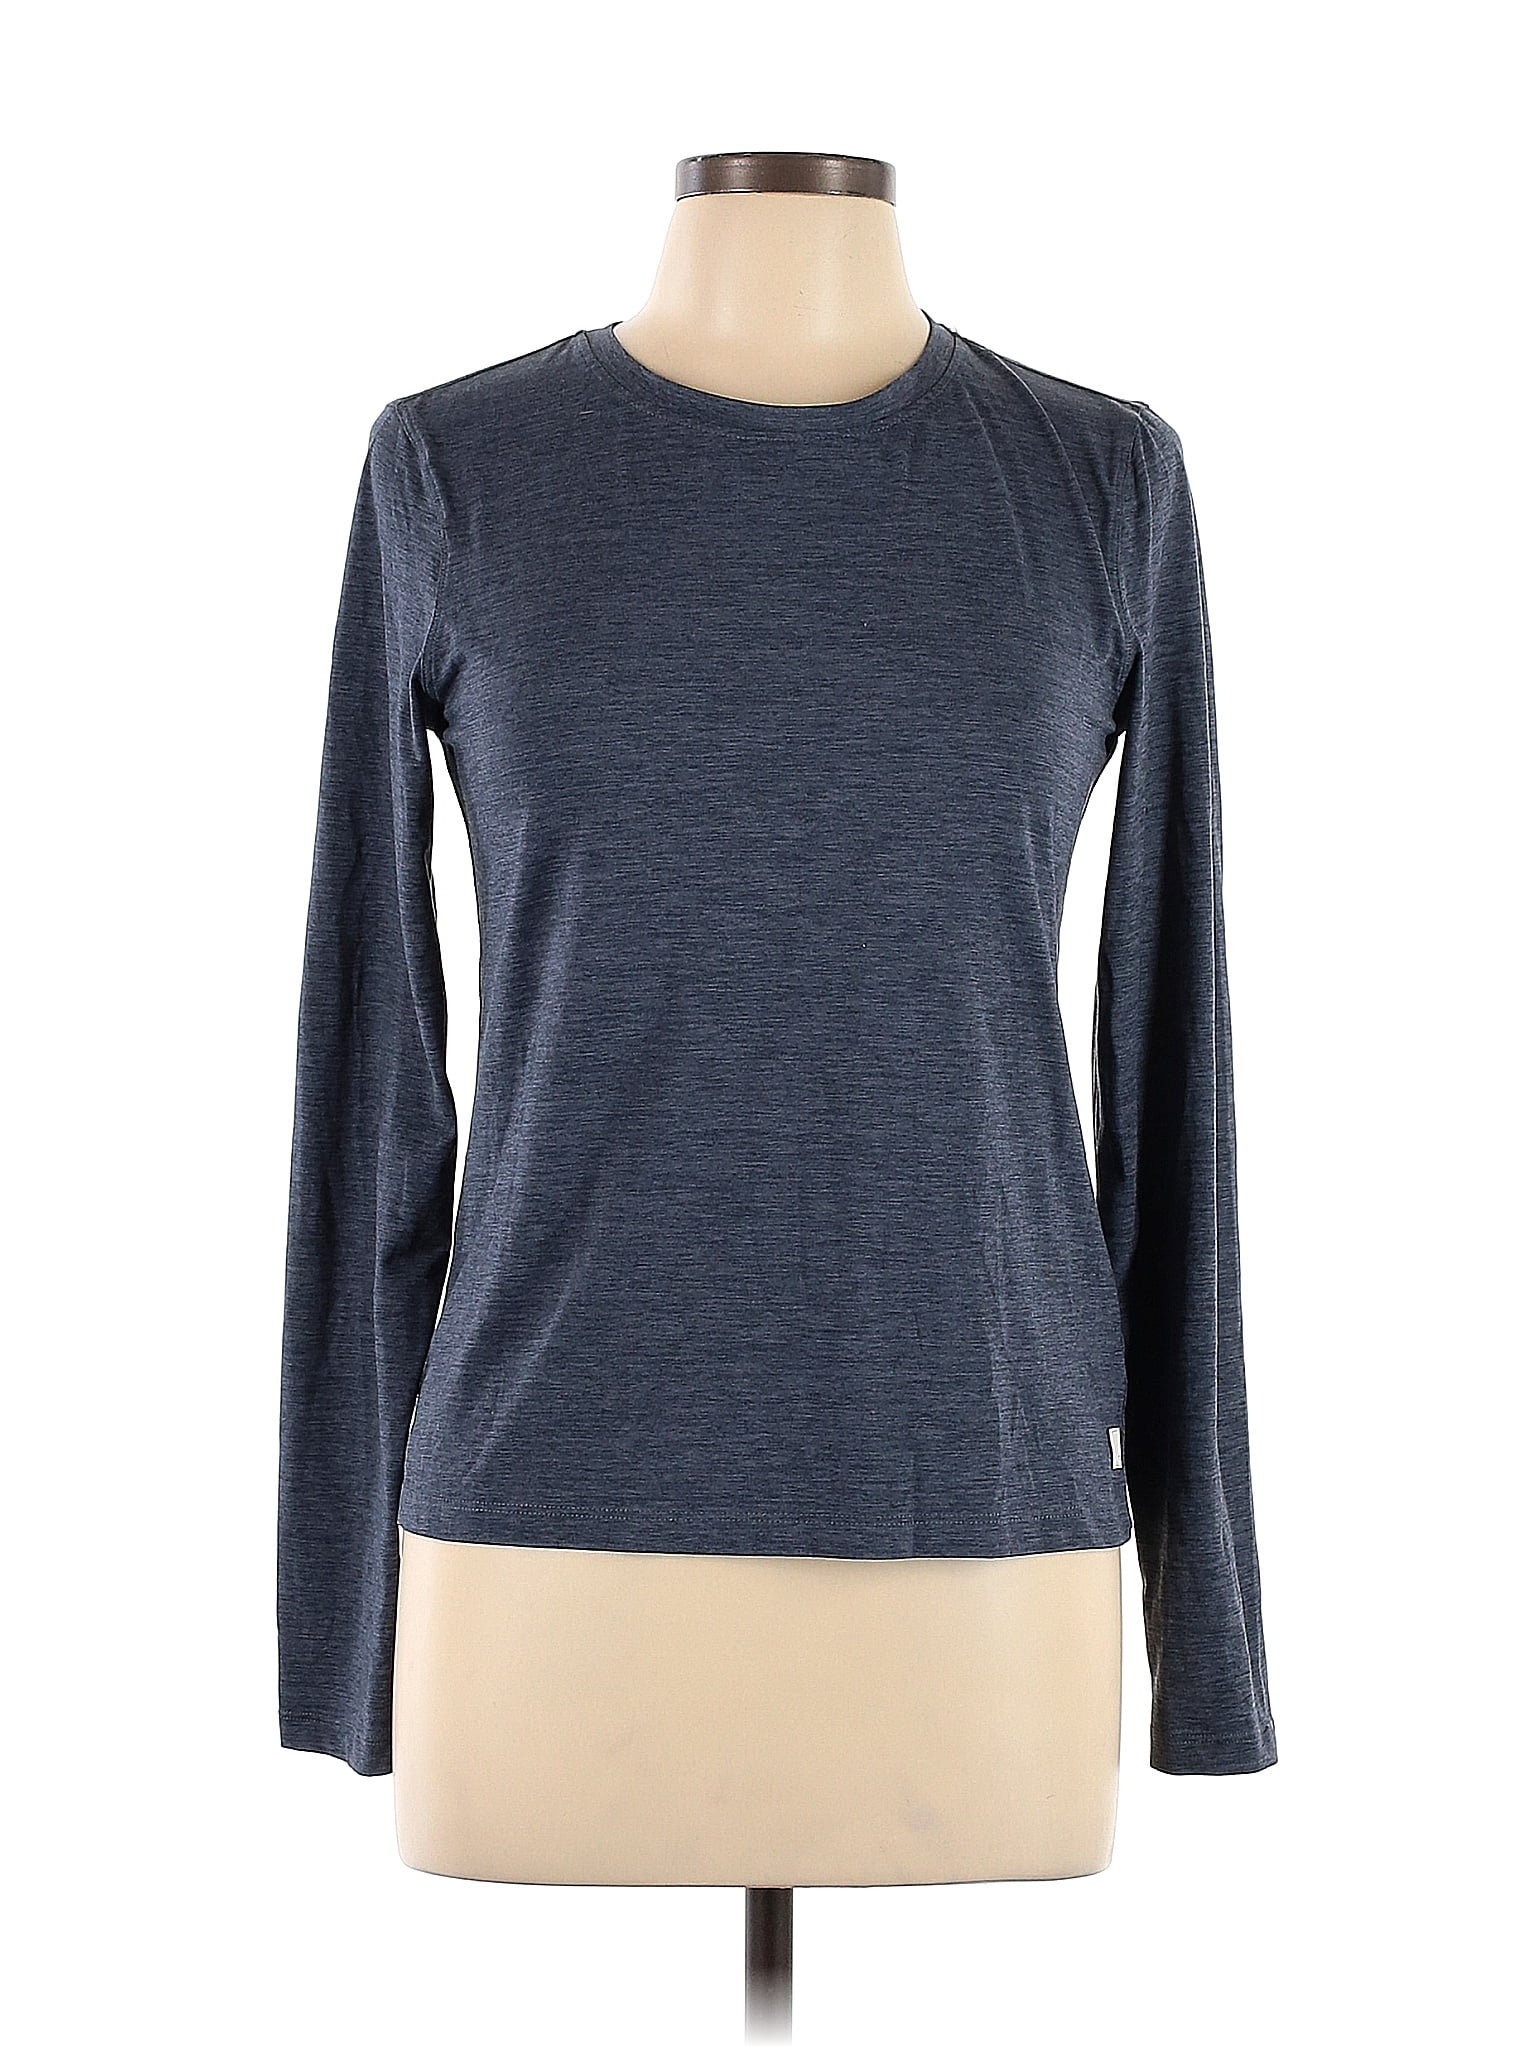 Vuori Stripes Gray Long Sleeve T-Shirt Size L - 53% off | ThredUp